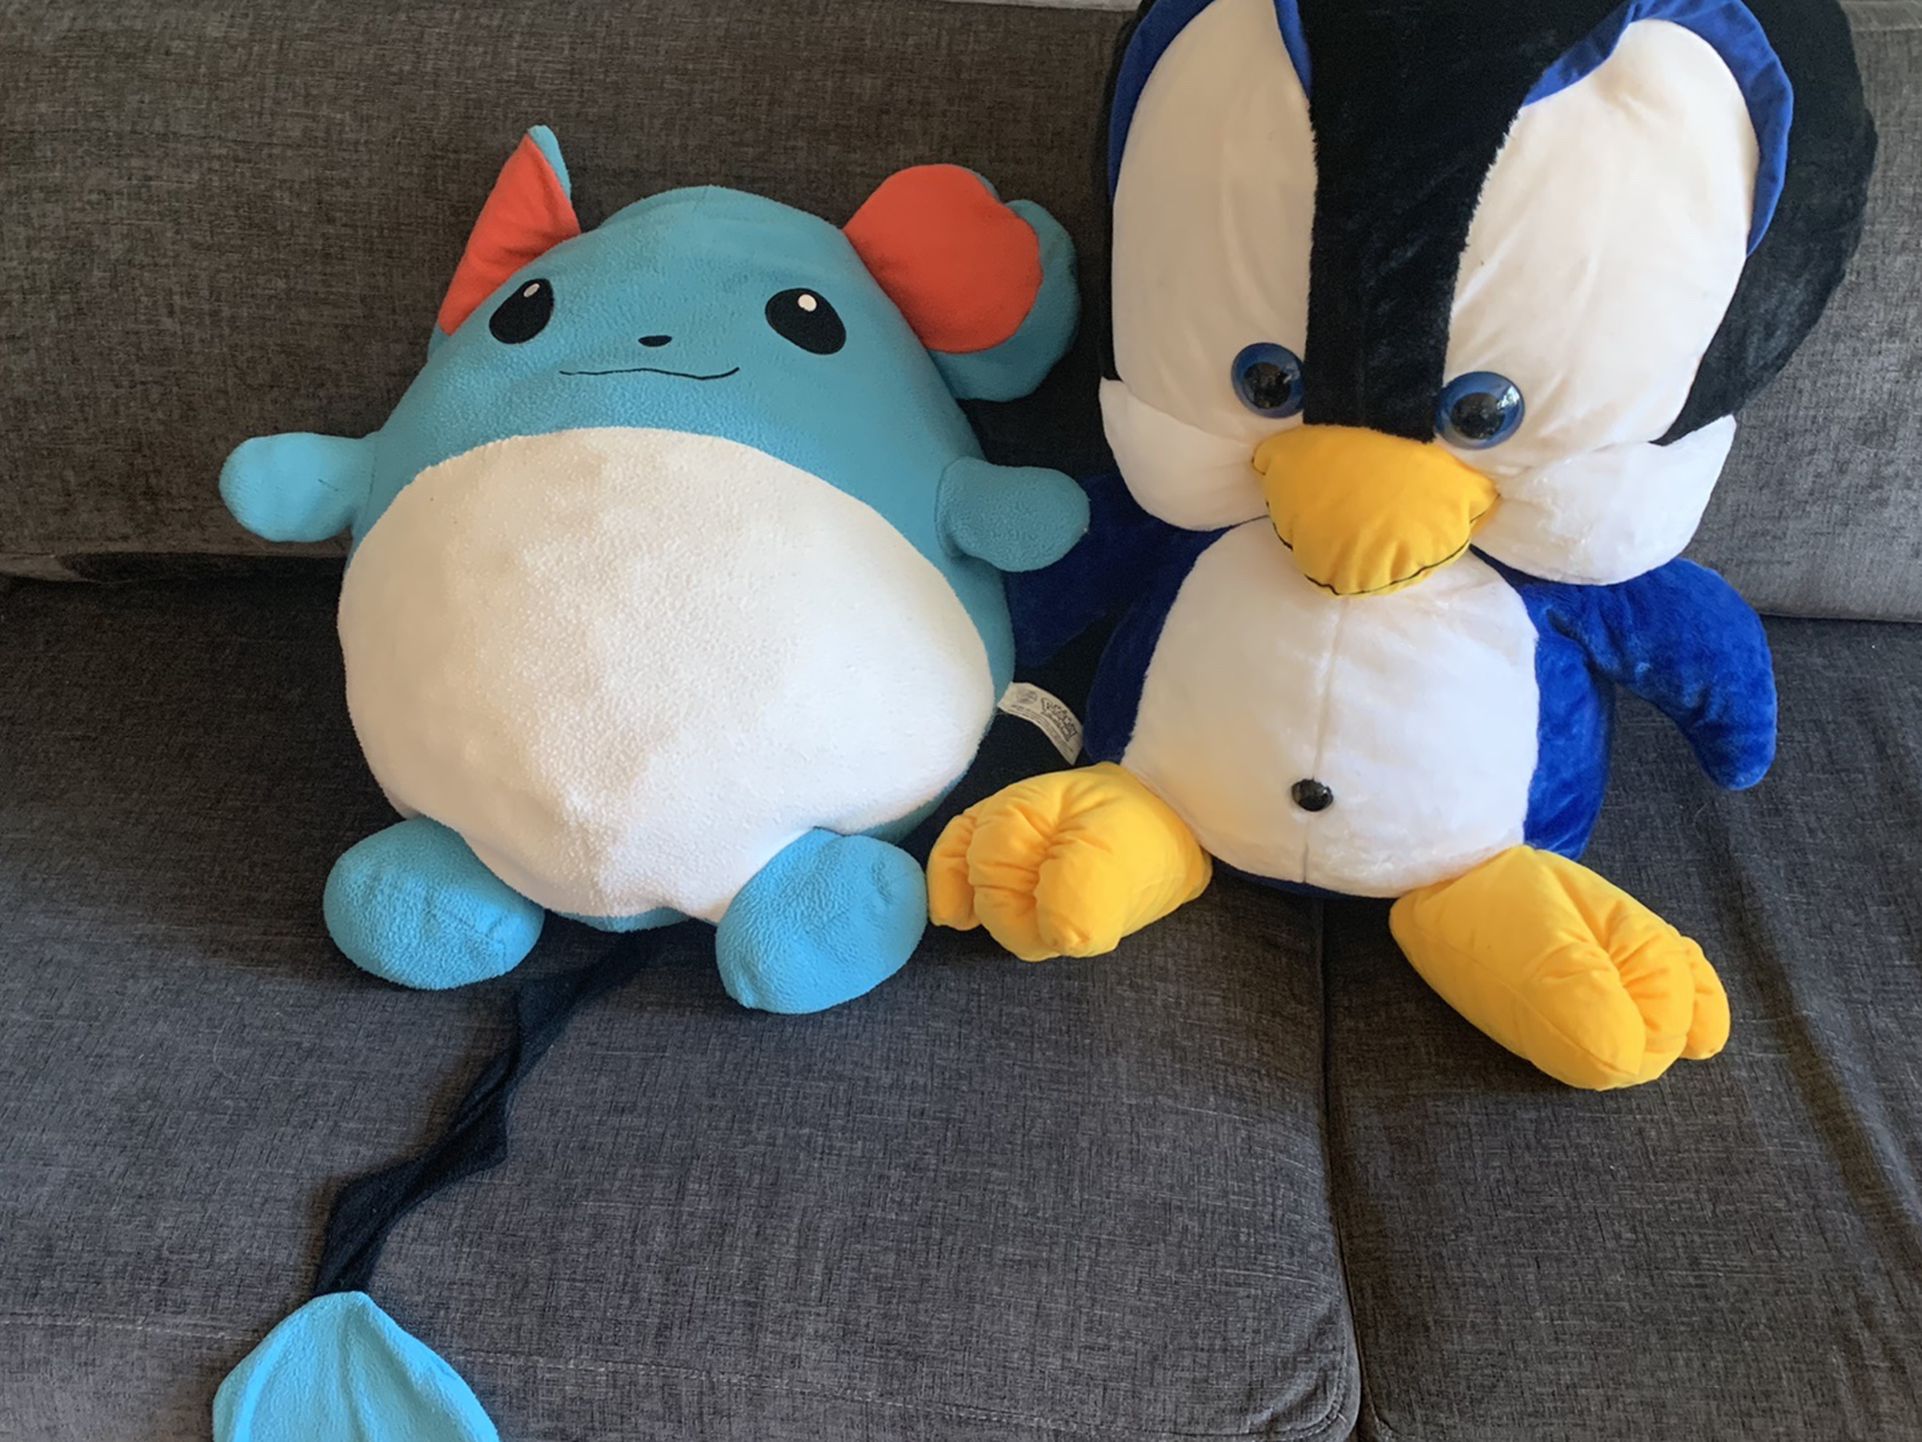 Two Large Stuffed Animals (One Pokemon Character)